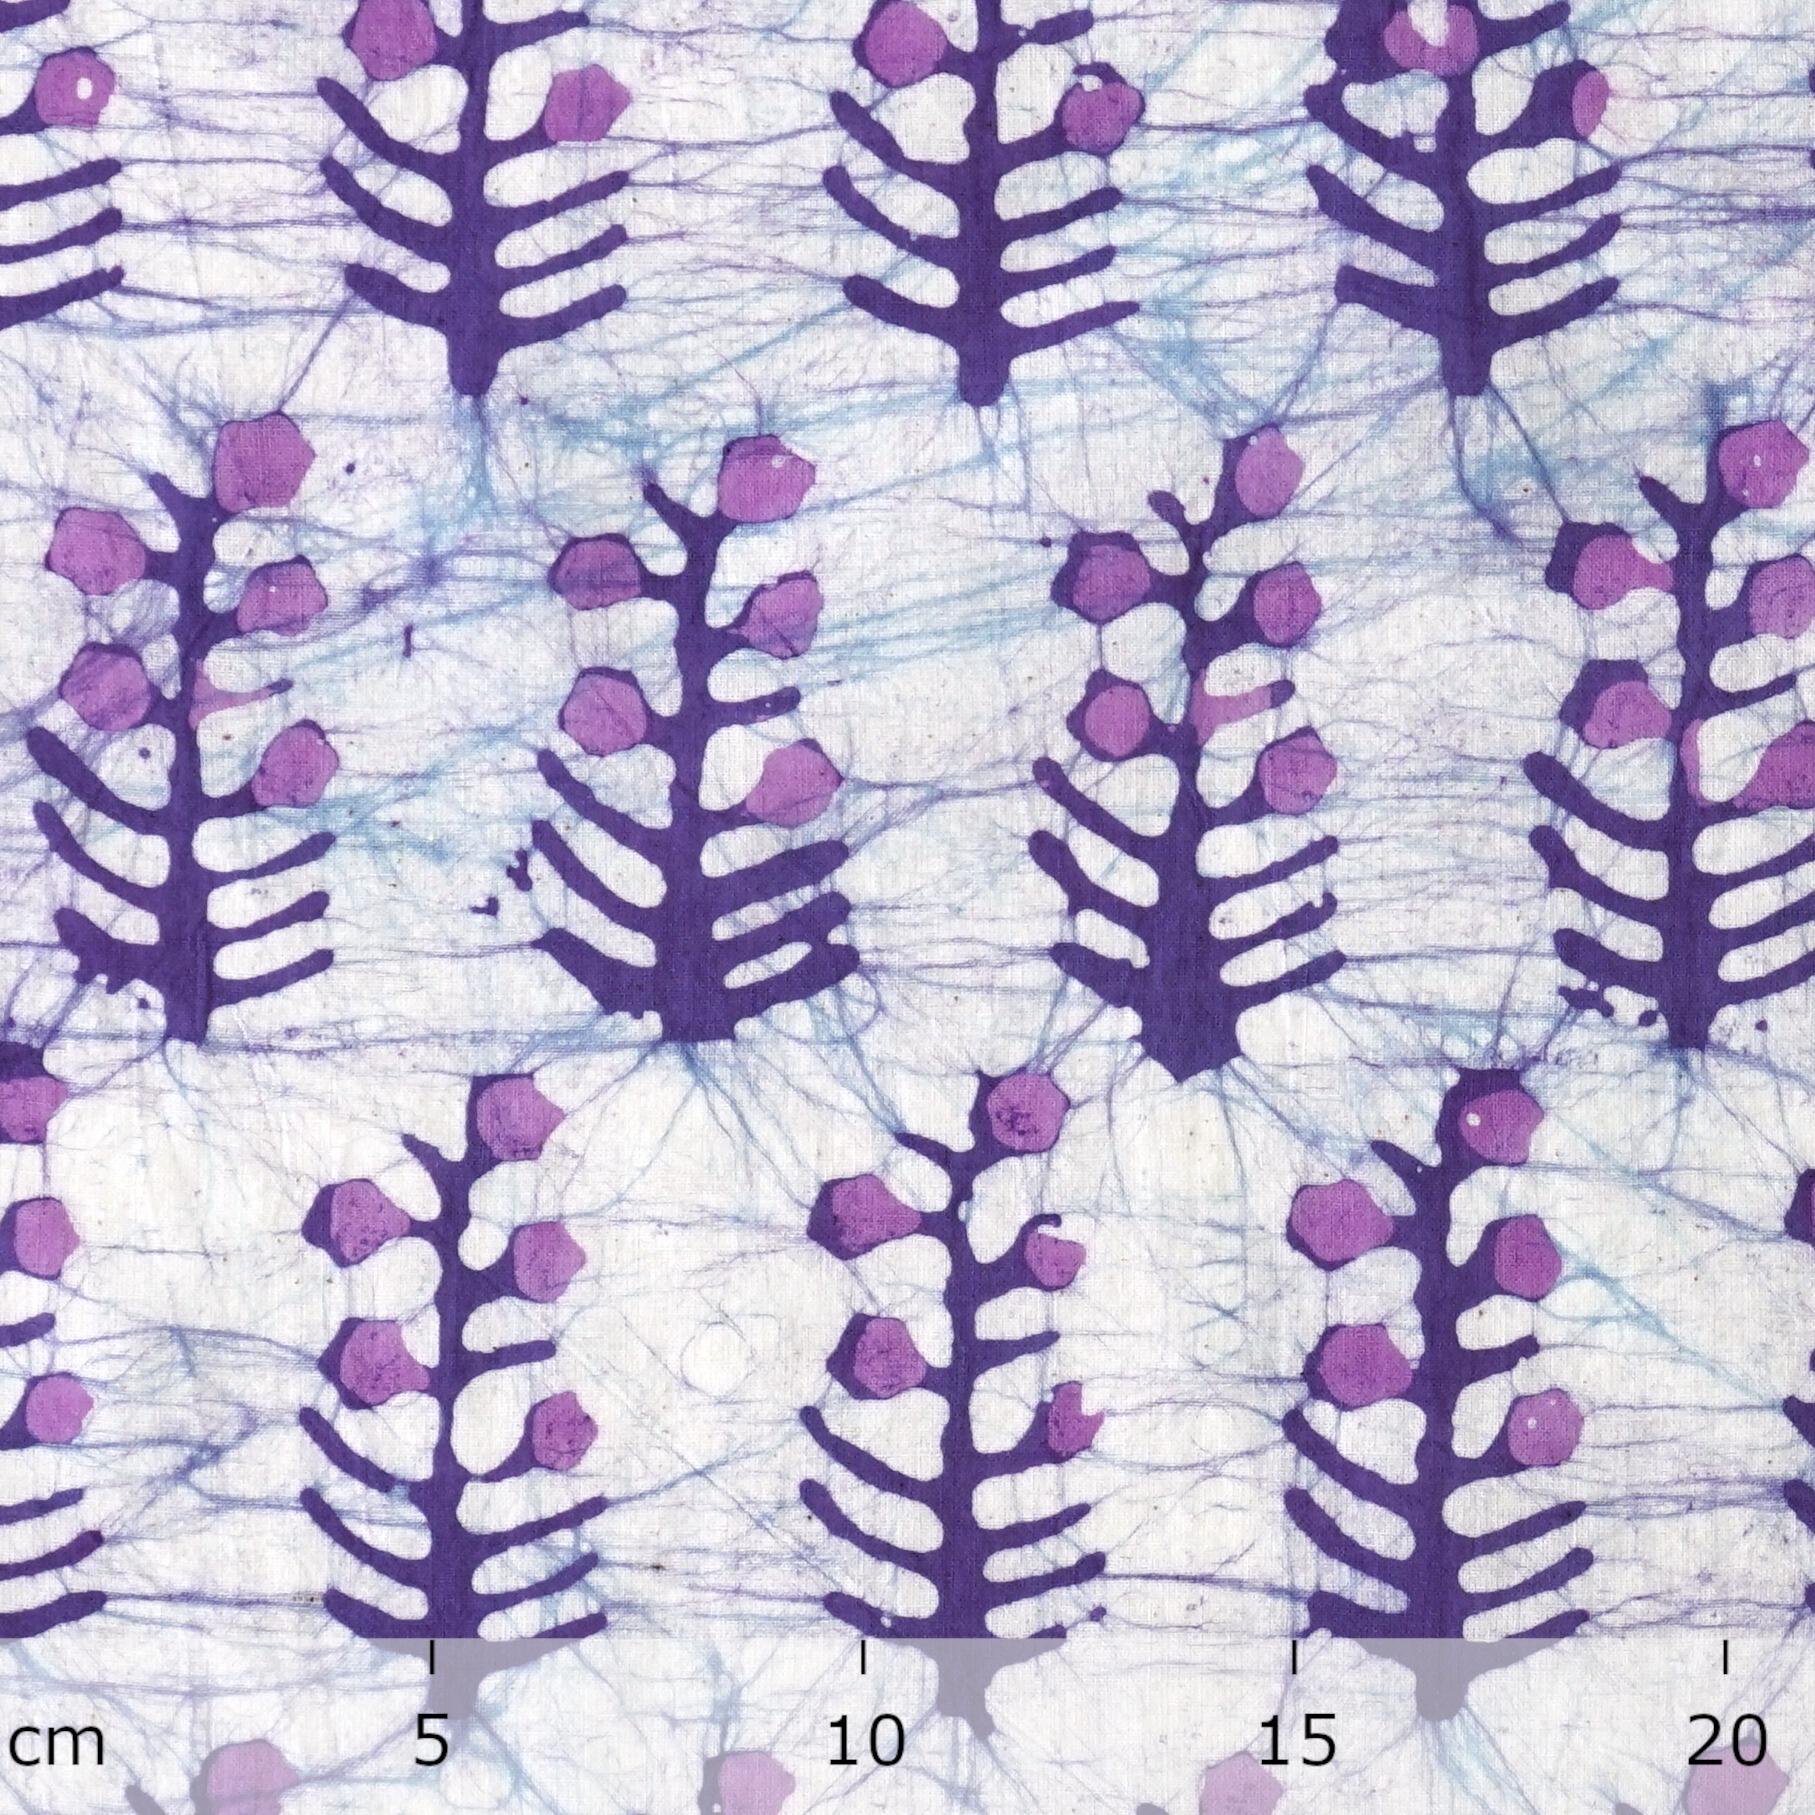 100% Block-Printed Batik Cotton Fabric From India - Purple Reactive Dye - Ruler